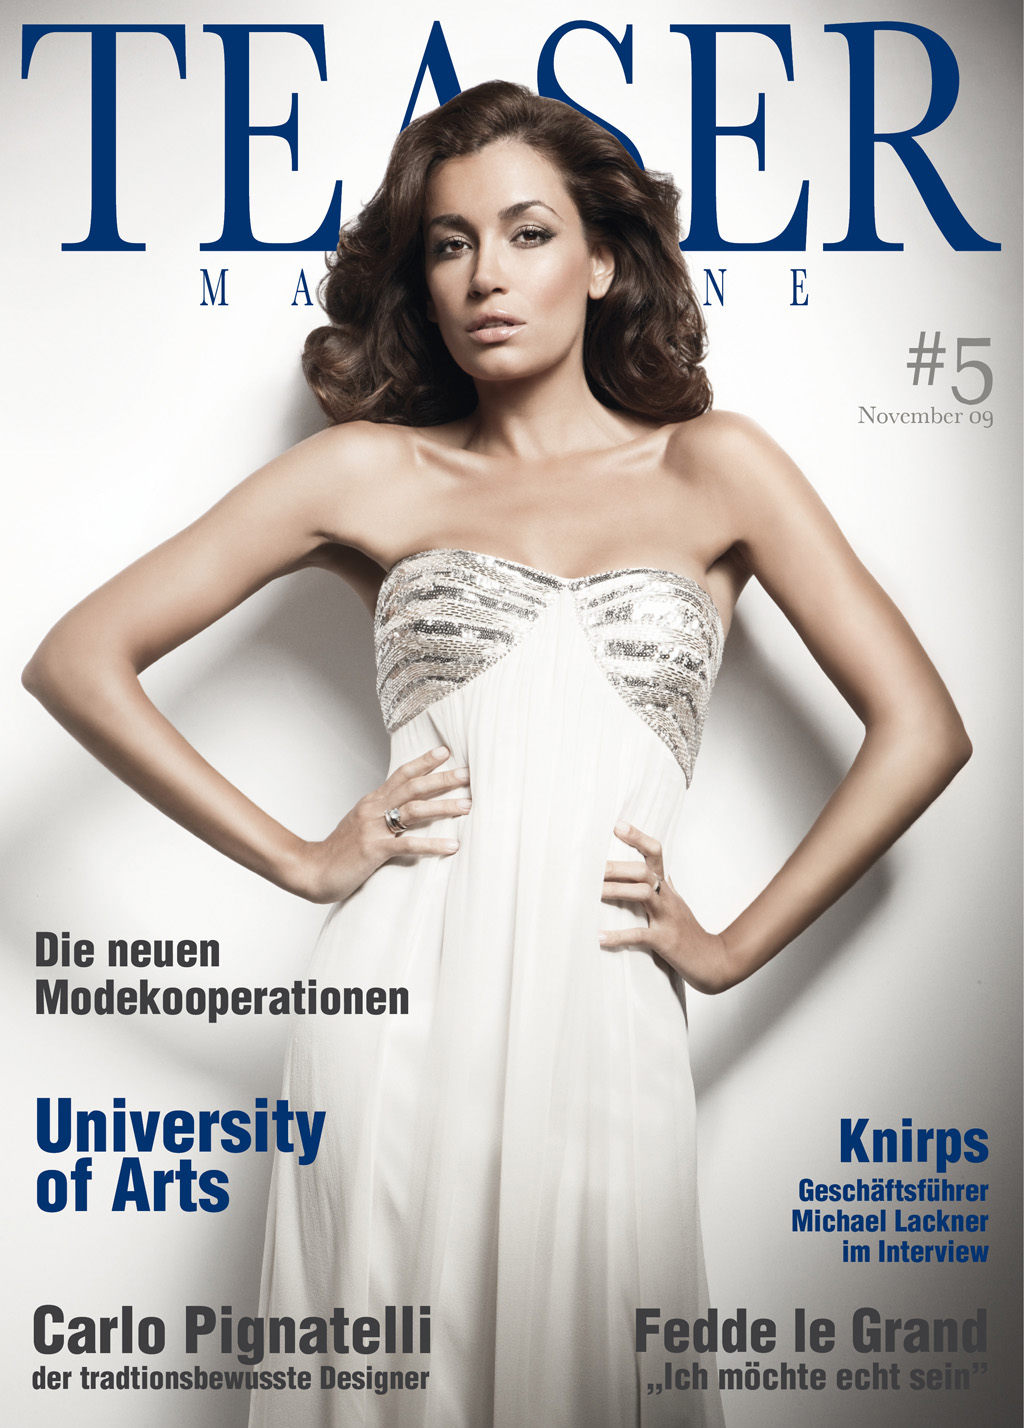 Deutsche-Politik-News.de | Teaser online fashion magazine #5 -  Covermodel: Jana Ina c/o Louisa Models